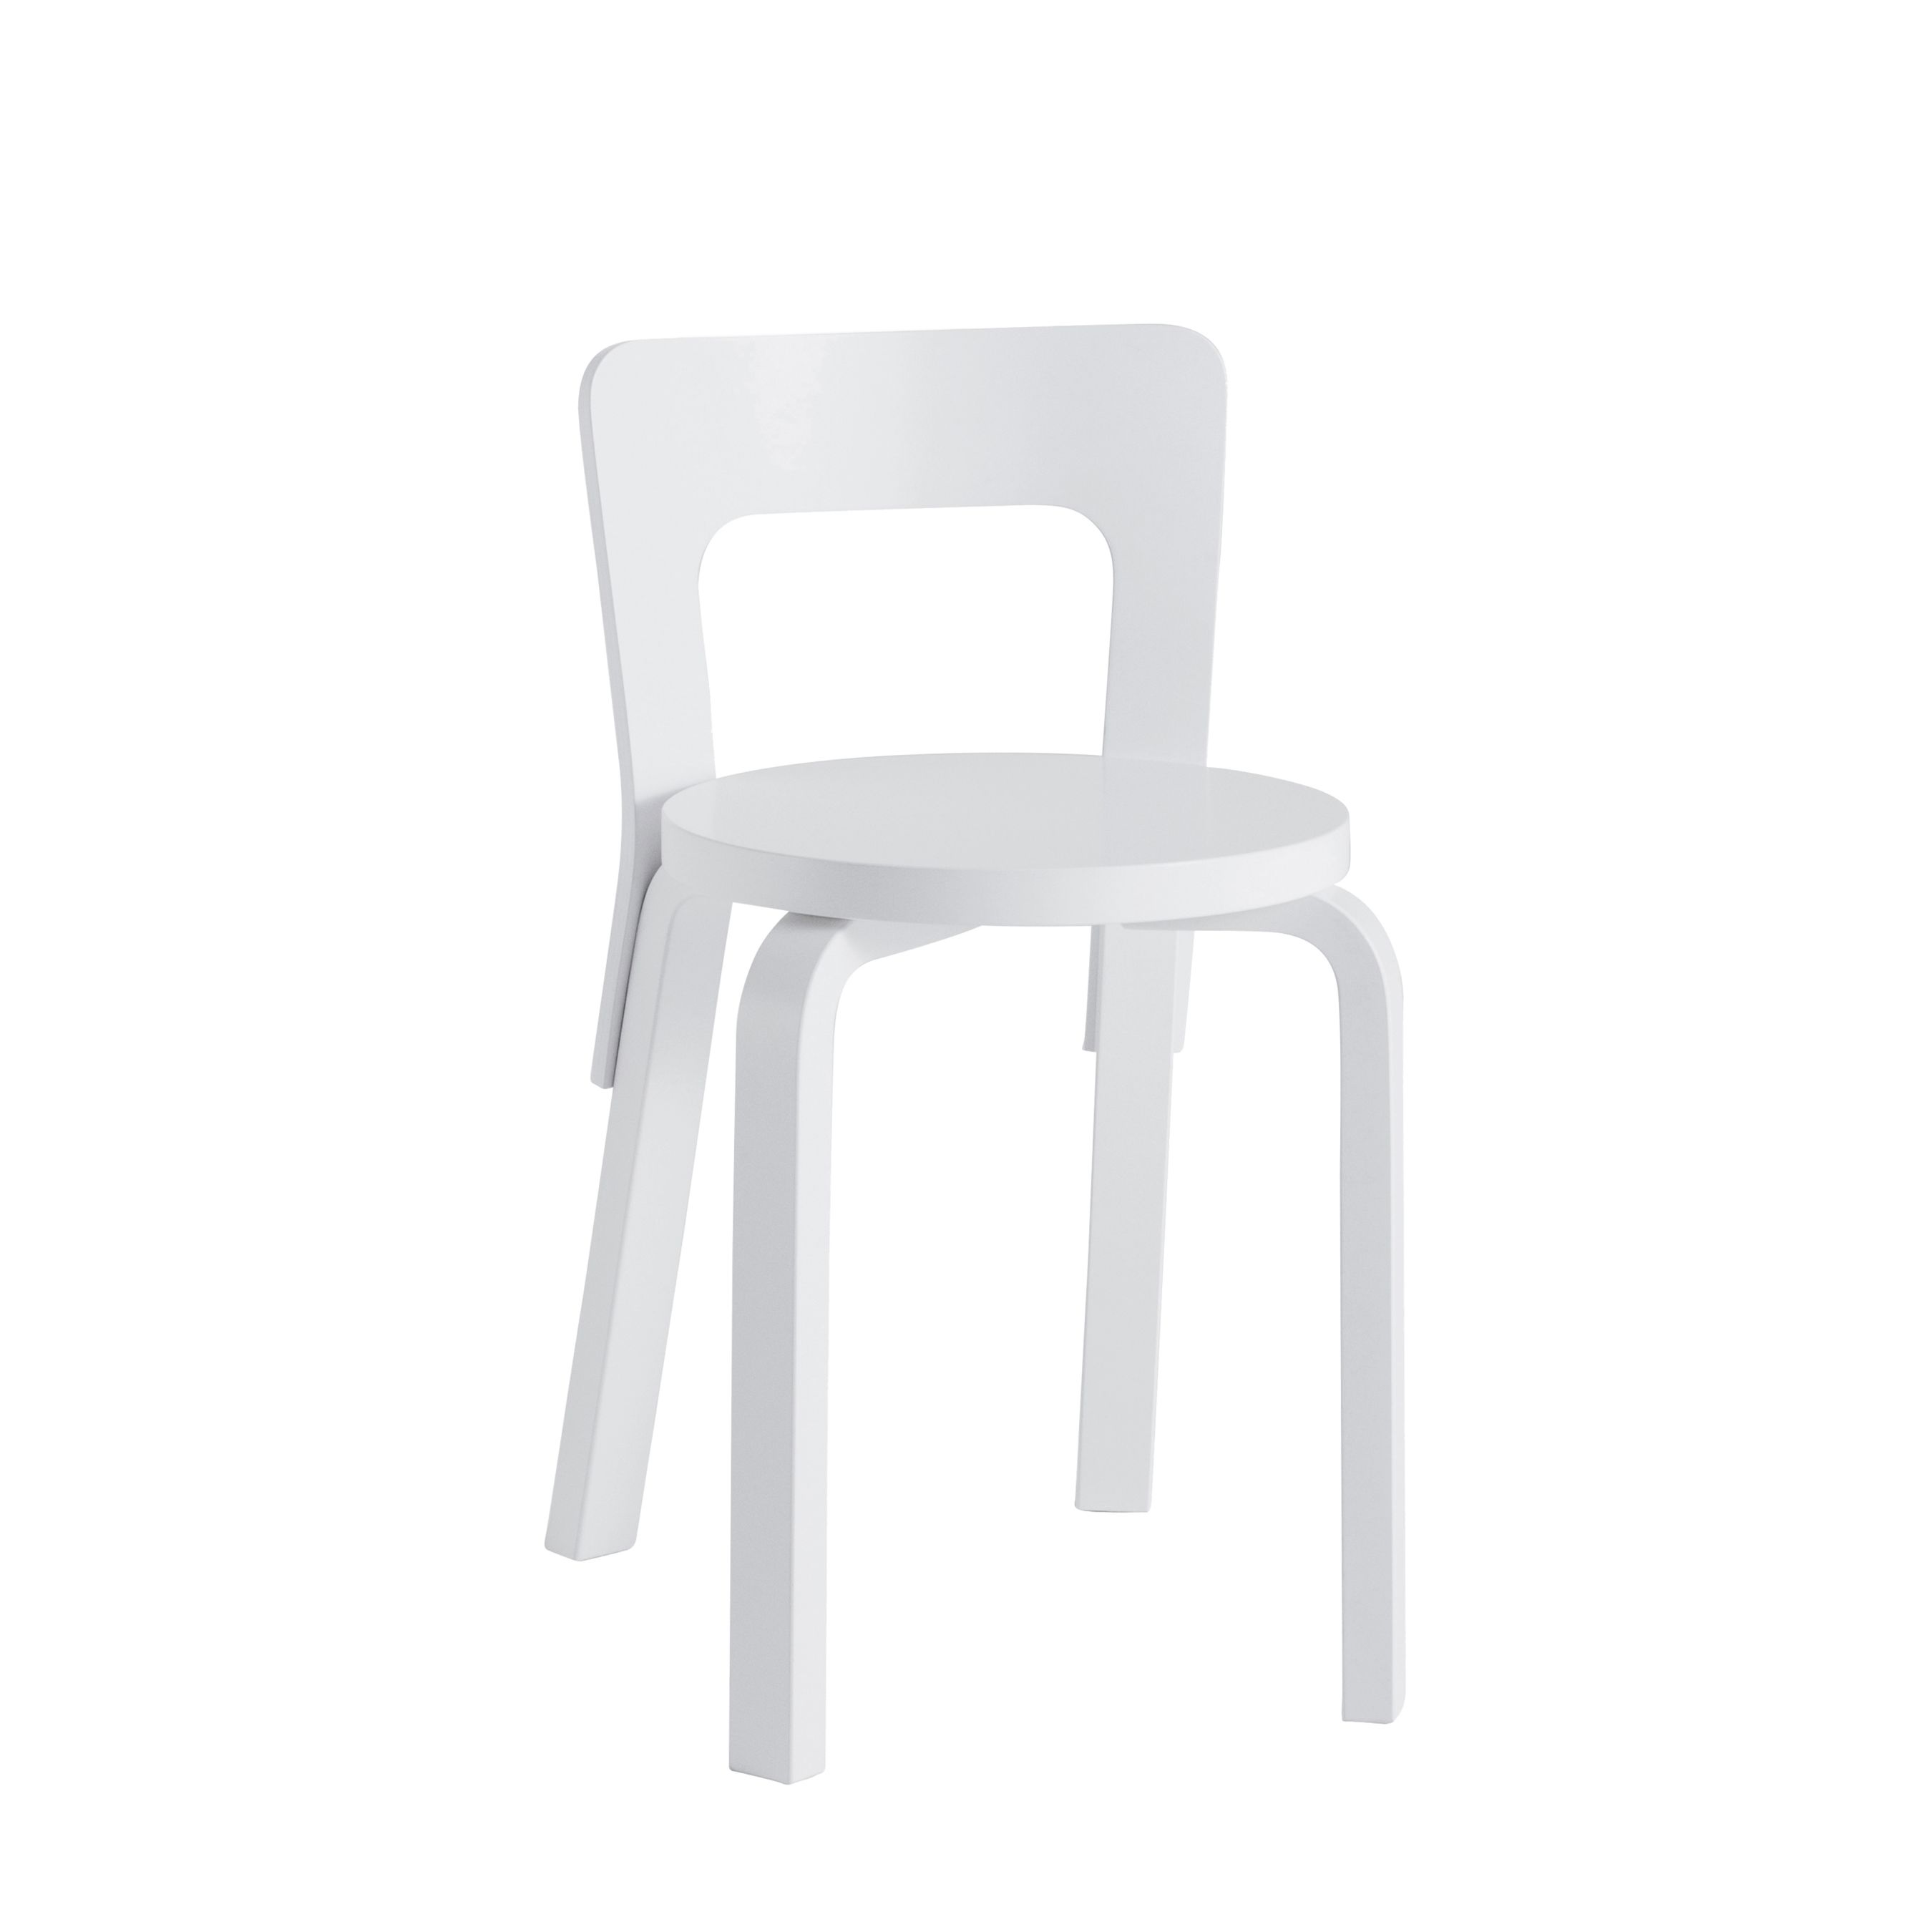 Chair-65-white-lacquer-1903724